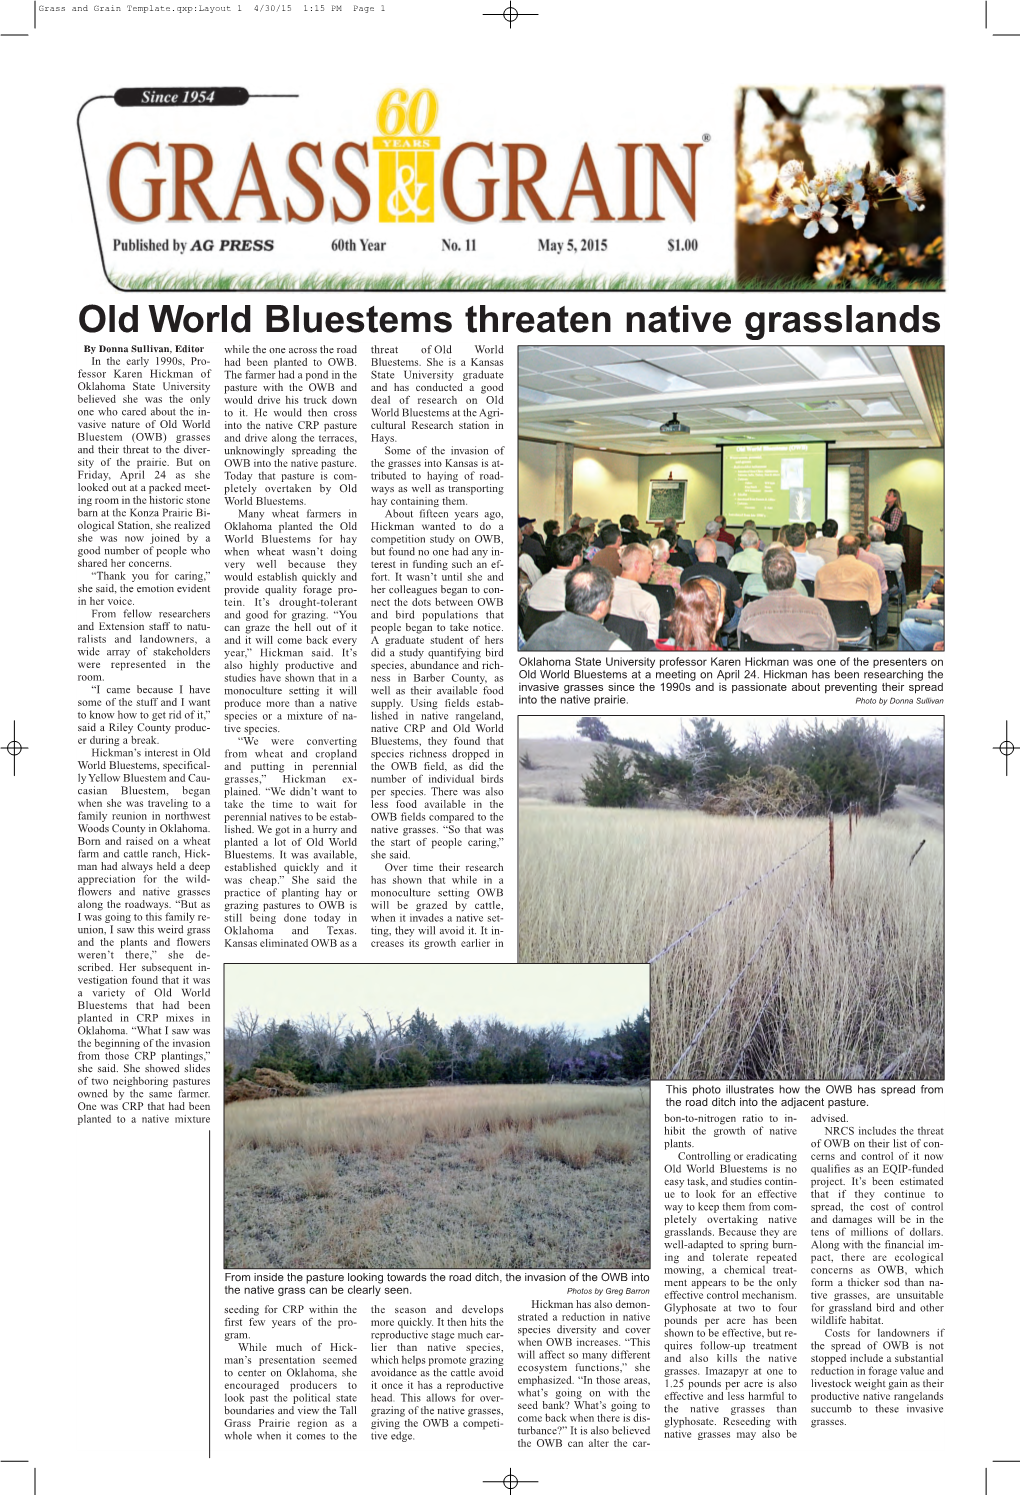 Old World Bluestems Threaten Native Grasslands